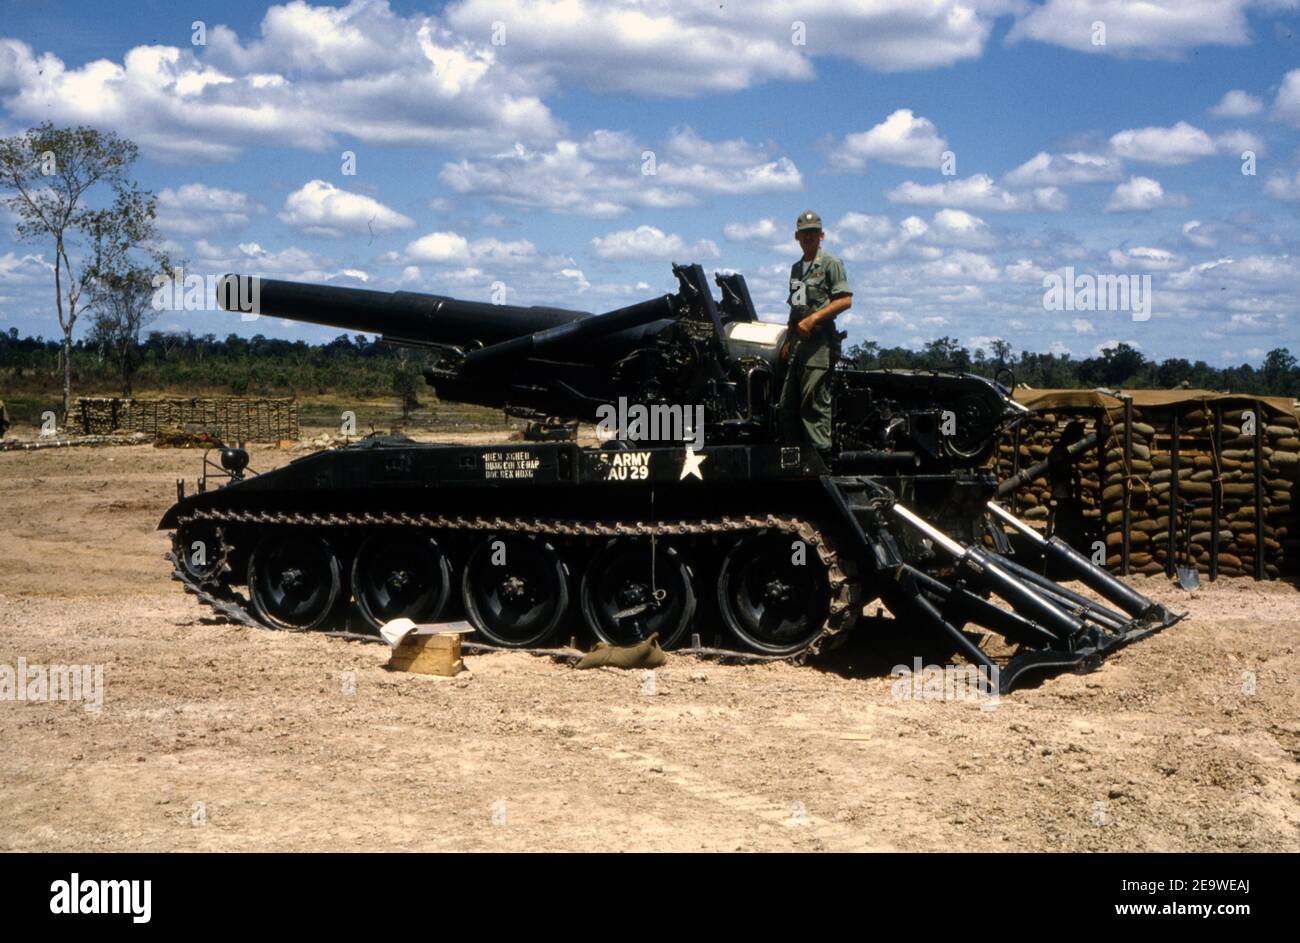 USA Vietnam-Krieg US ARMY Selbstfahrschütz (Selbstfahrlafette) M110 203 mm - Vietnam war United States Army Self-Propelled Gun M110 8 Zoll Stockfoto